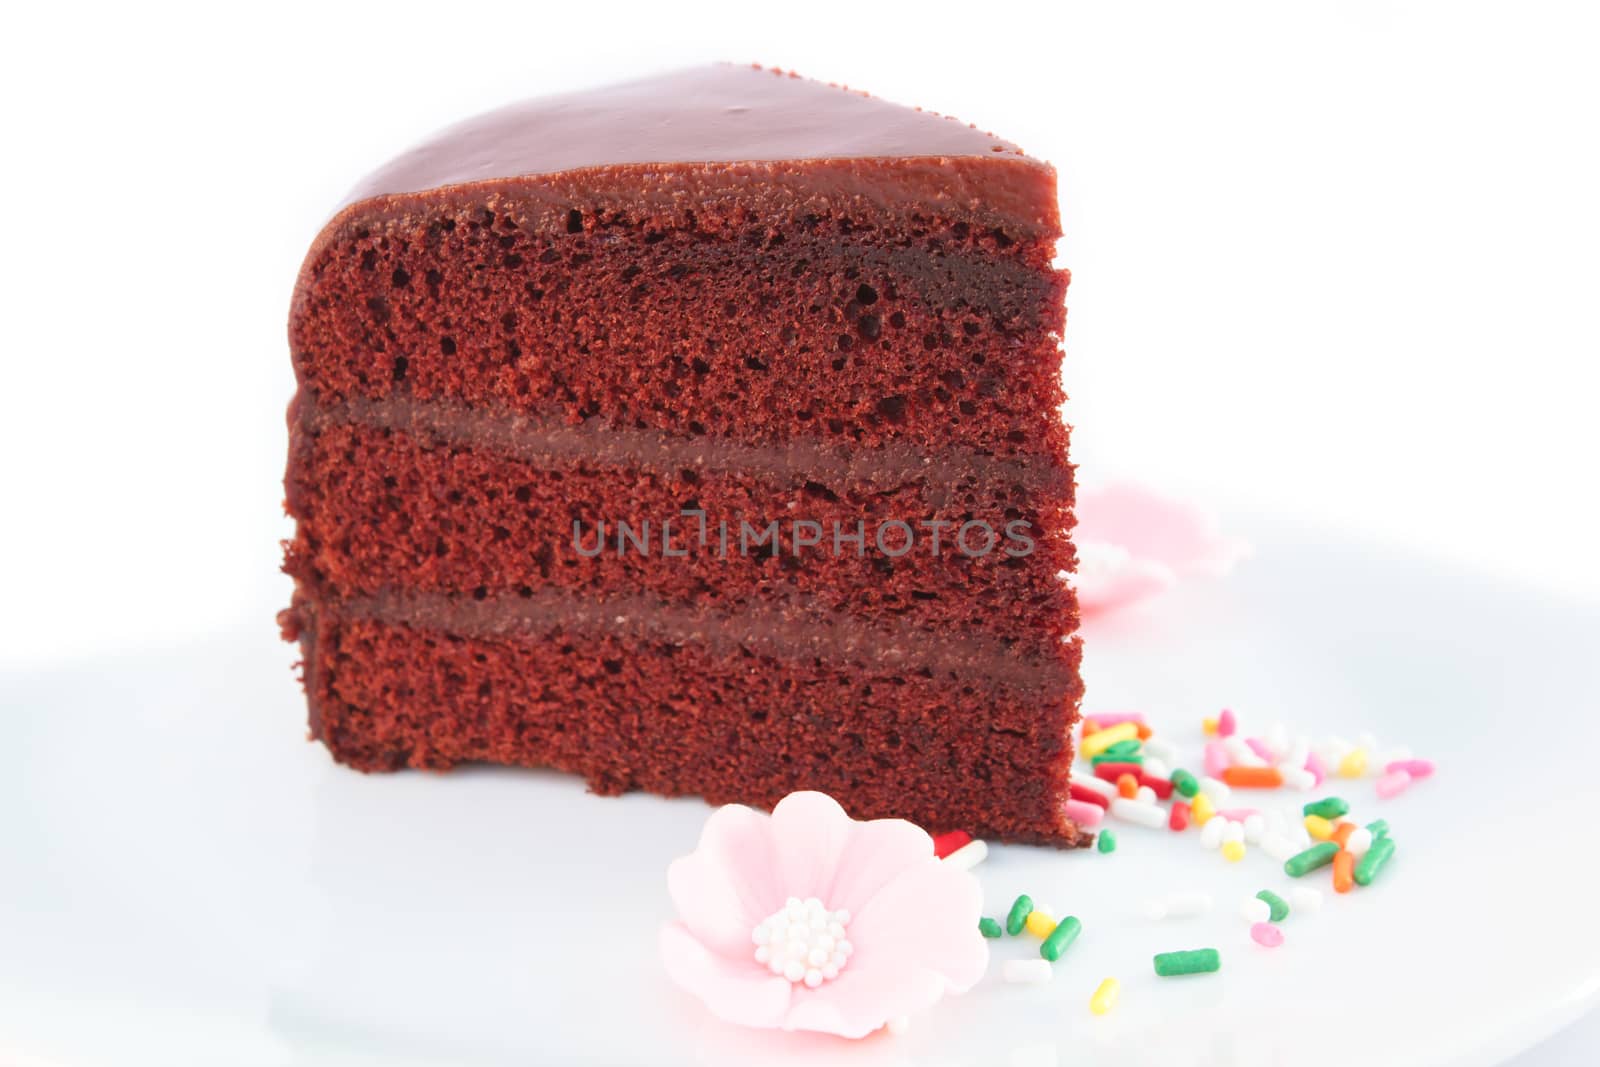 piece of chocolate cake with fudge sauce.